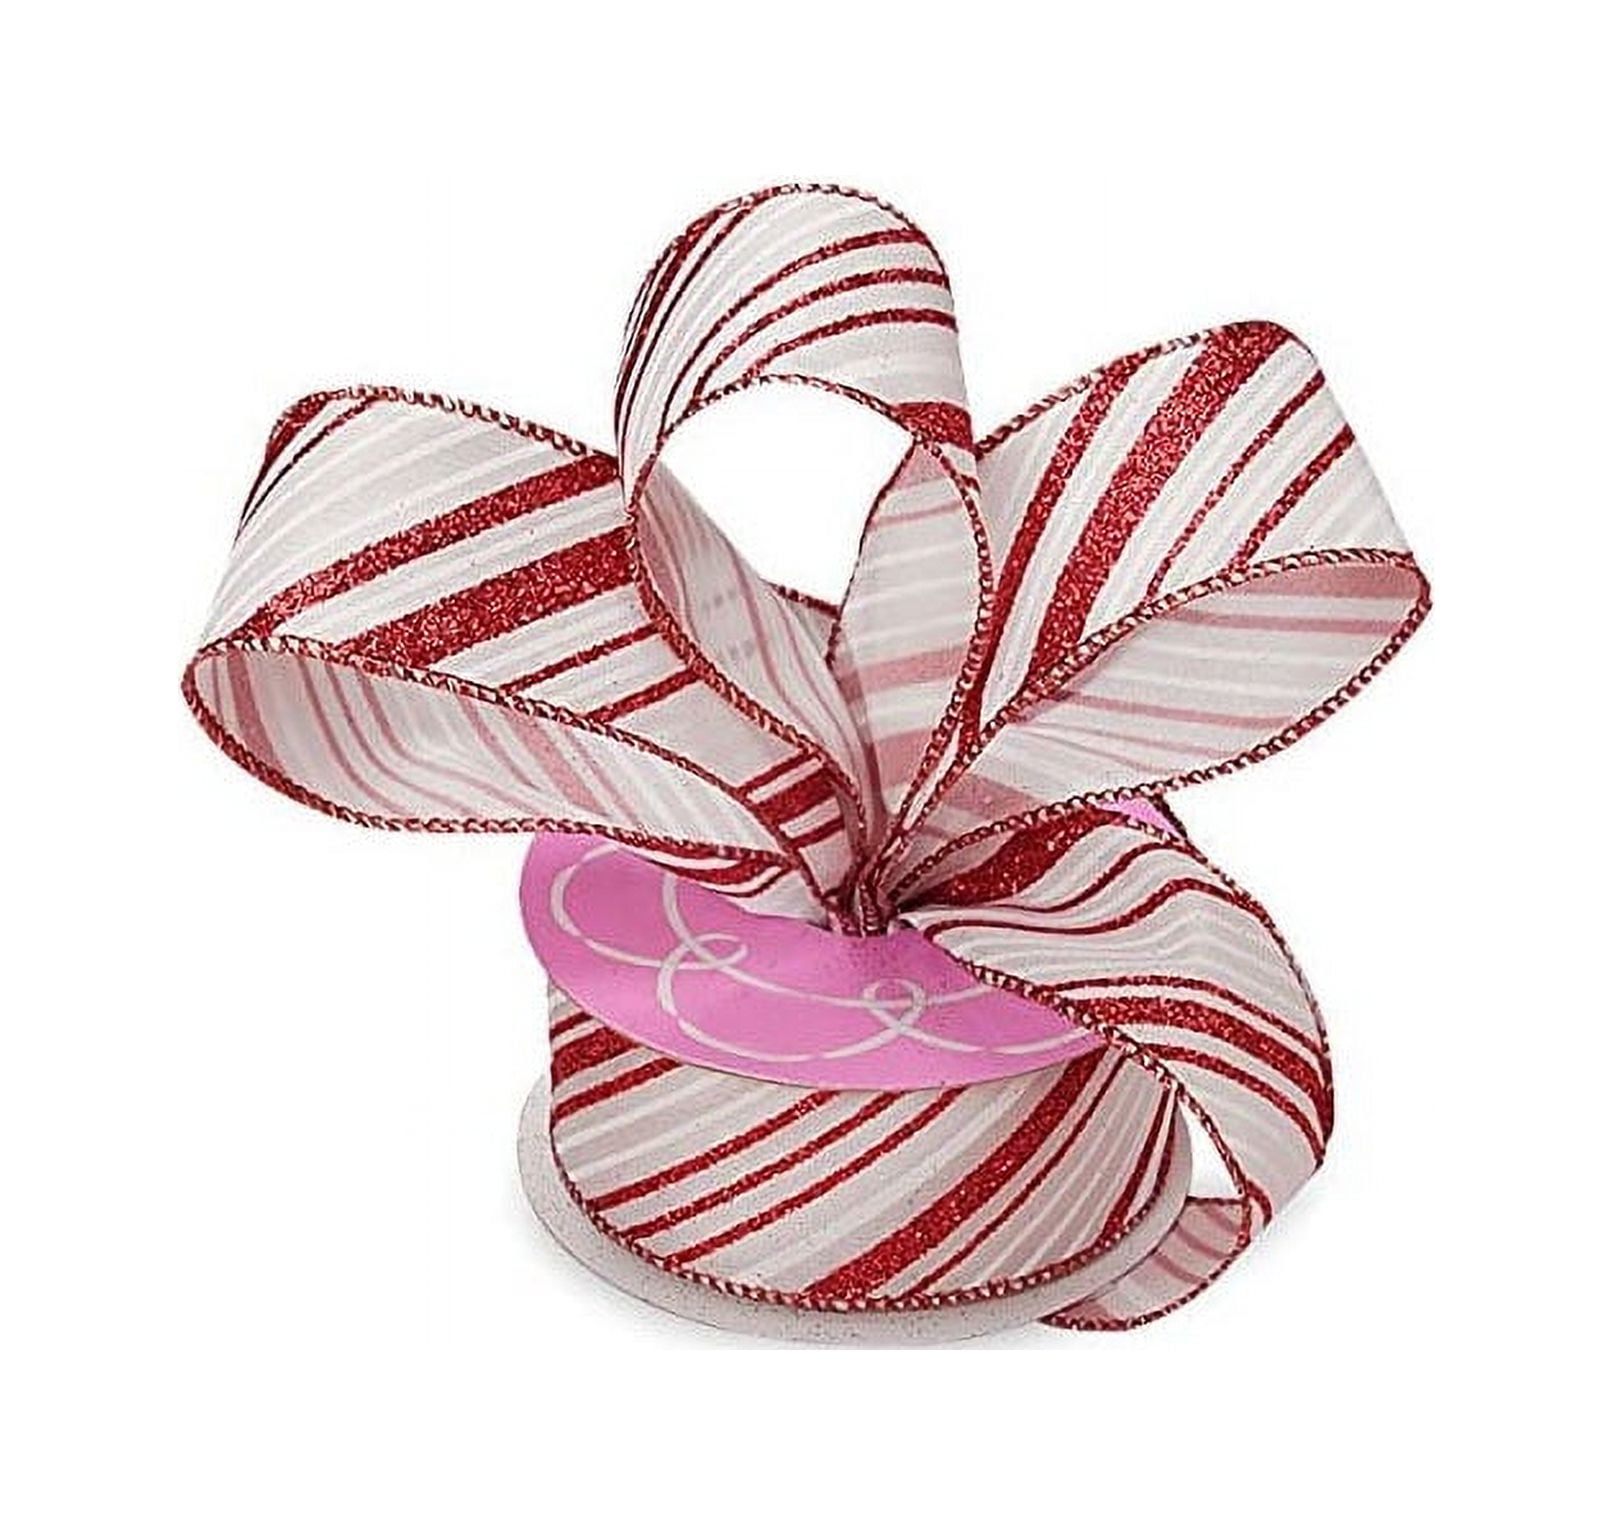 Sparkling Pink Glitter Wired Craft Ribbon 2 x 40 Yards